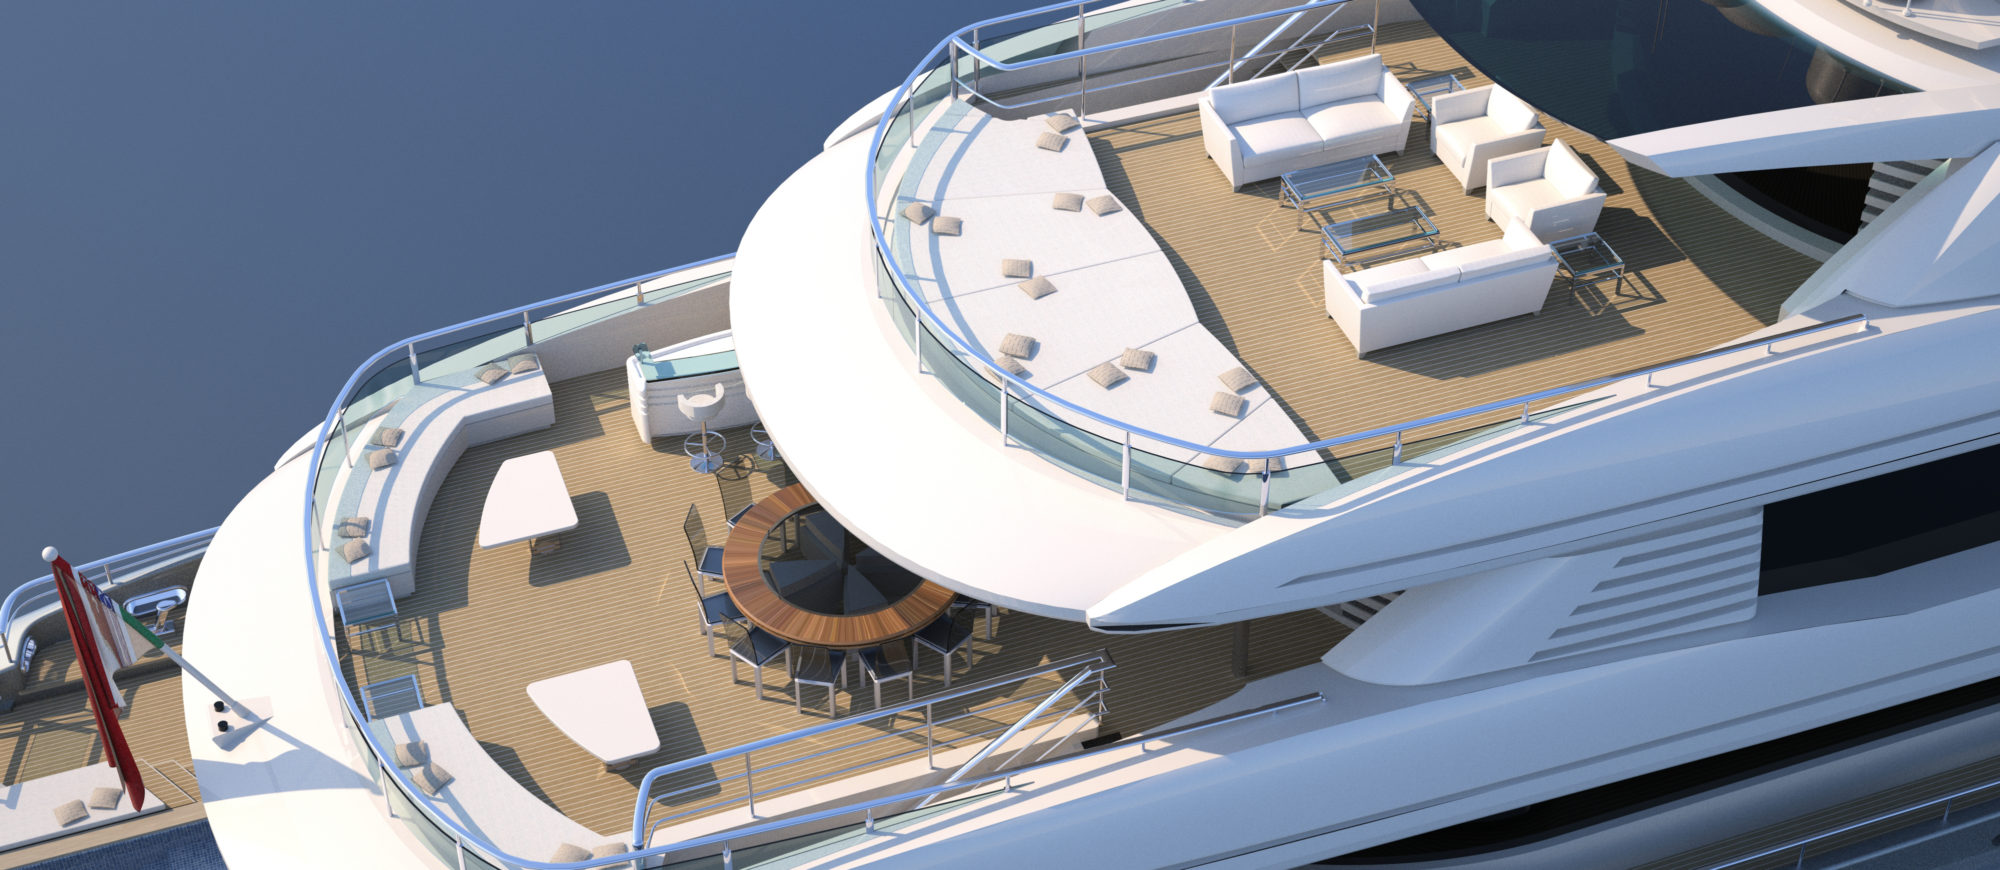 Conrad C233 Superyacht Concept Vallicelli Visualisation Aft Decks 2